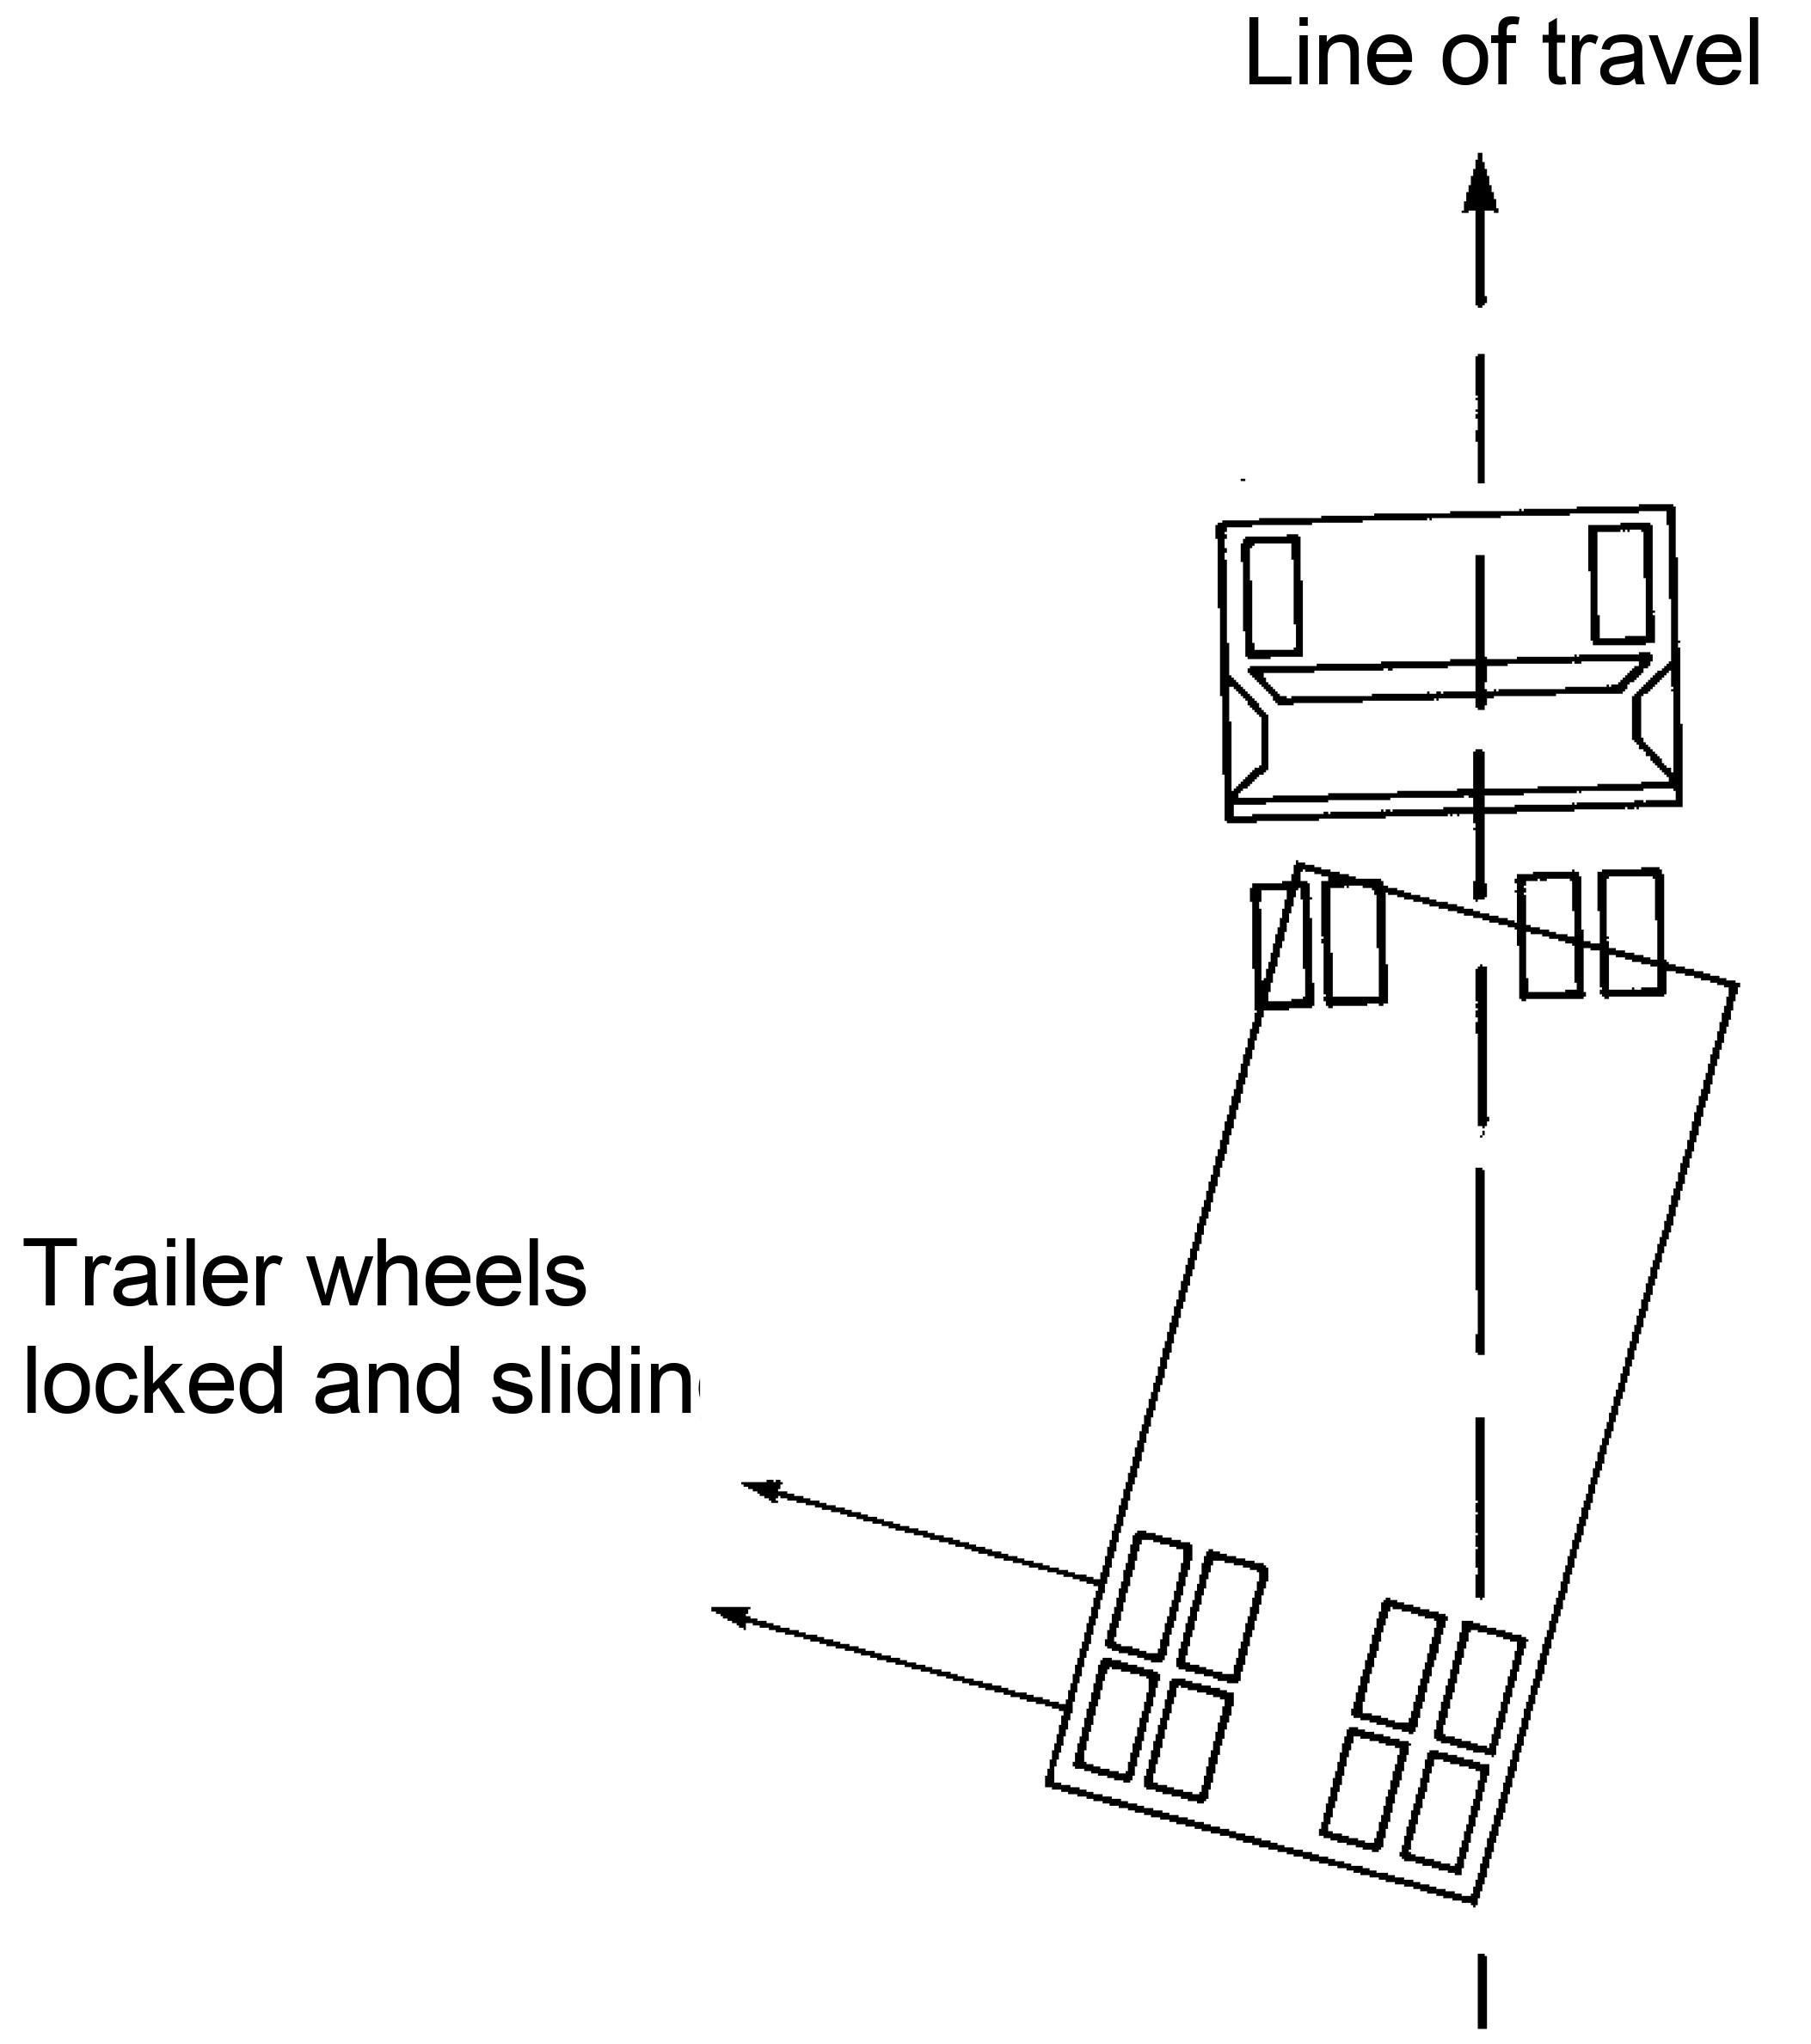 School Bus Air Brake System Diagram Bination Vehicles Cdl Test Of School Bus Air Brake System Diagram